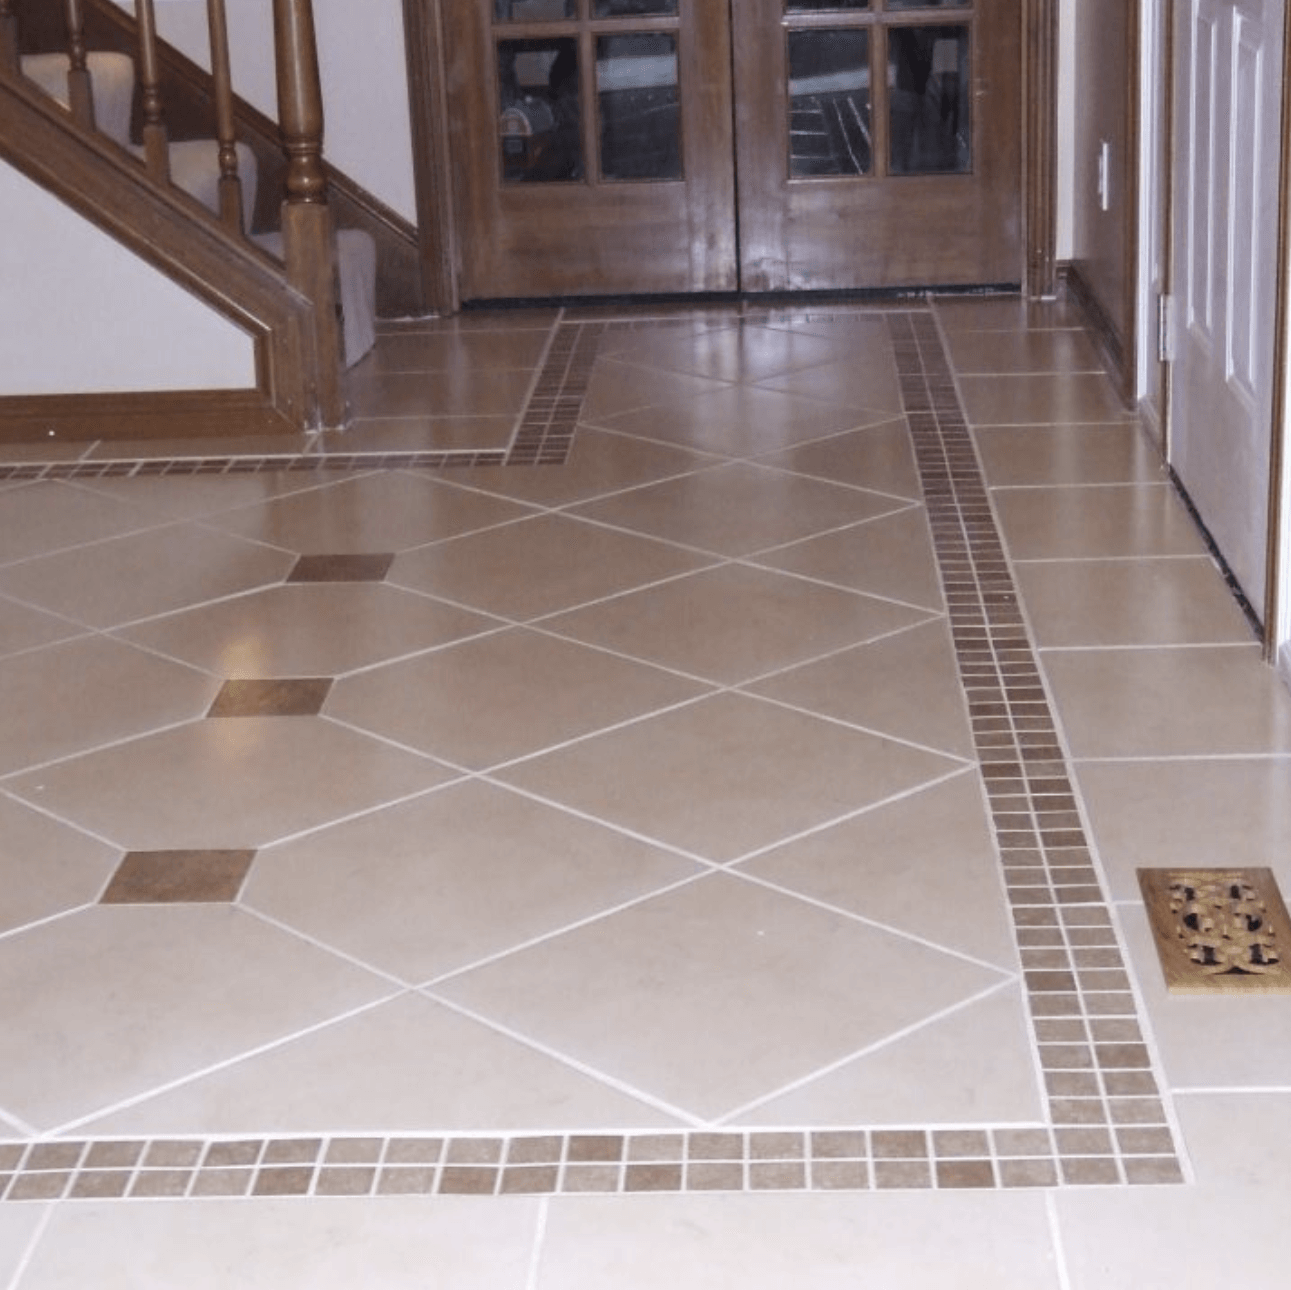 Floor tile installation, mosaic border